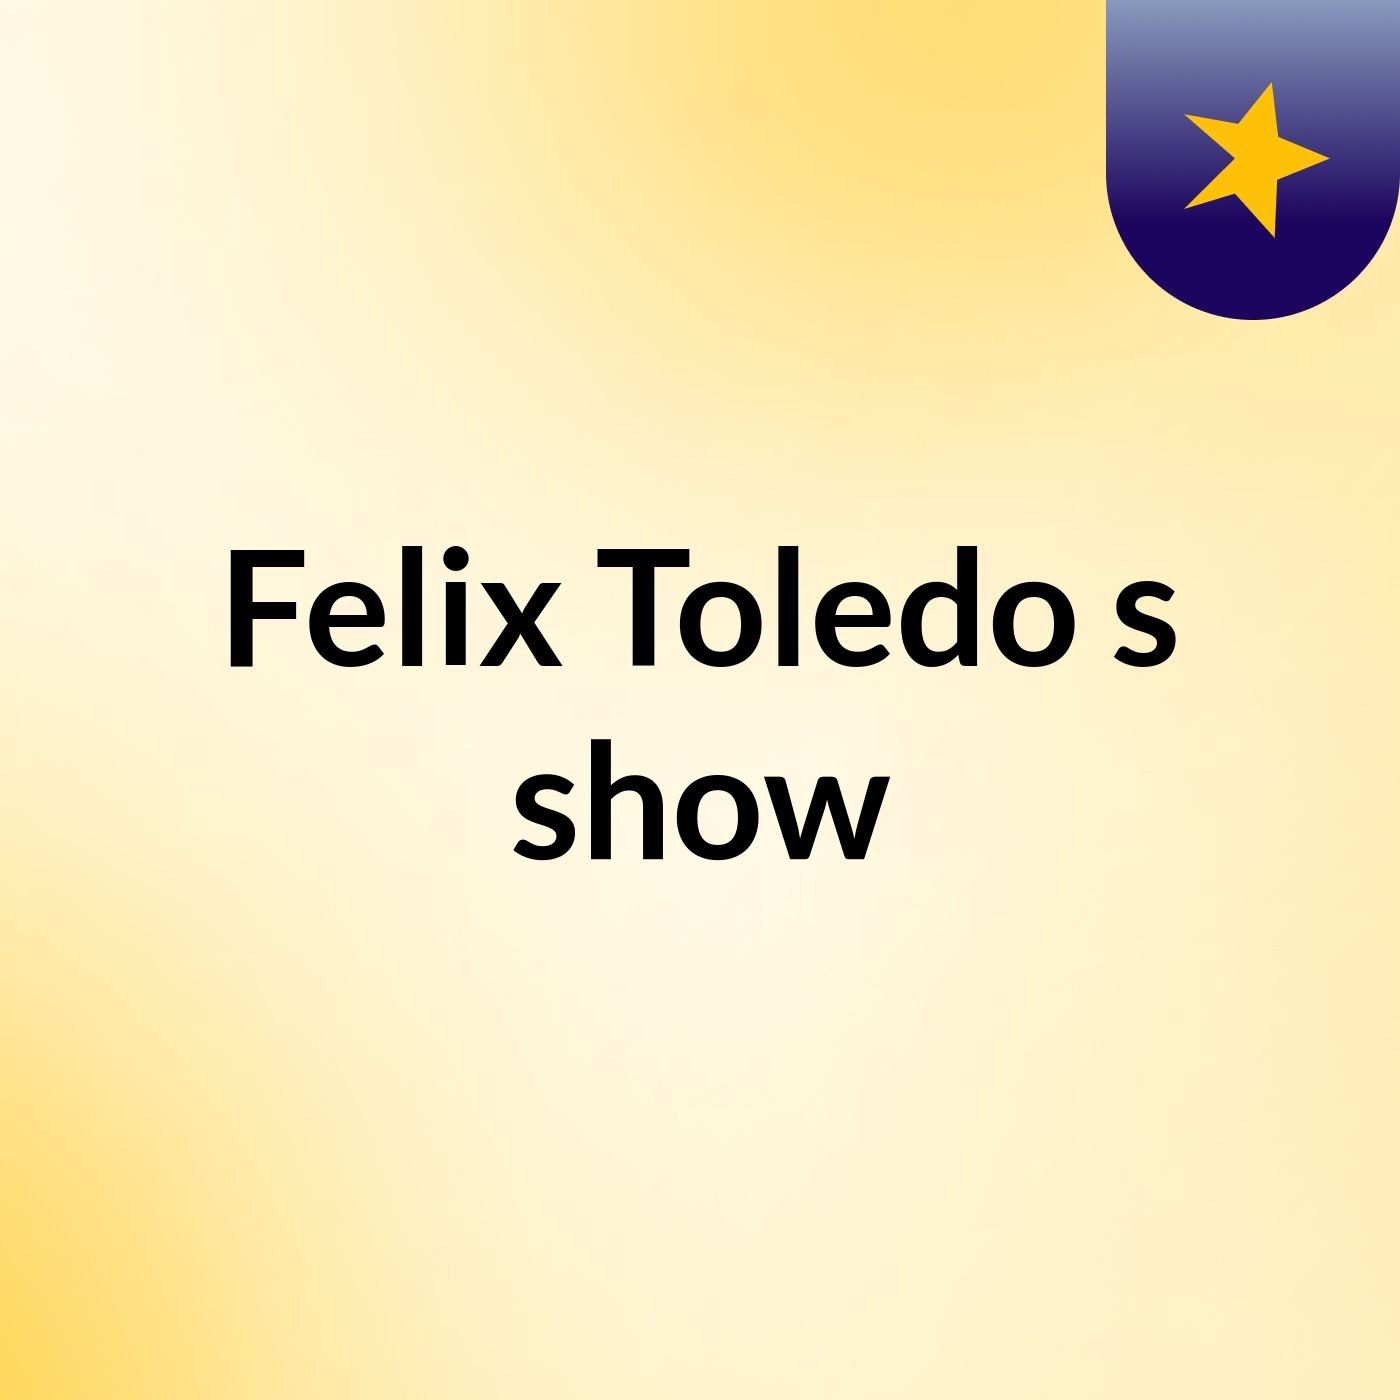 Felix Toledo's show